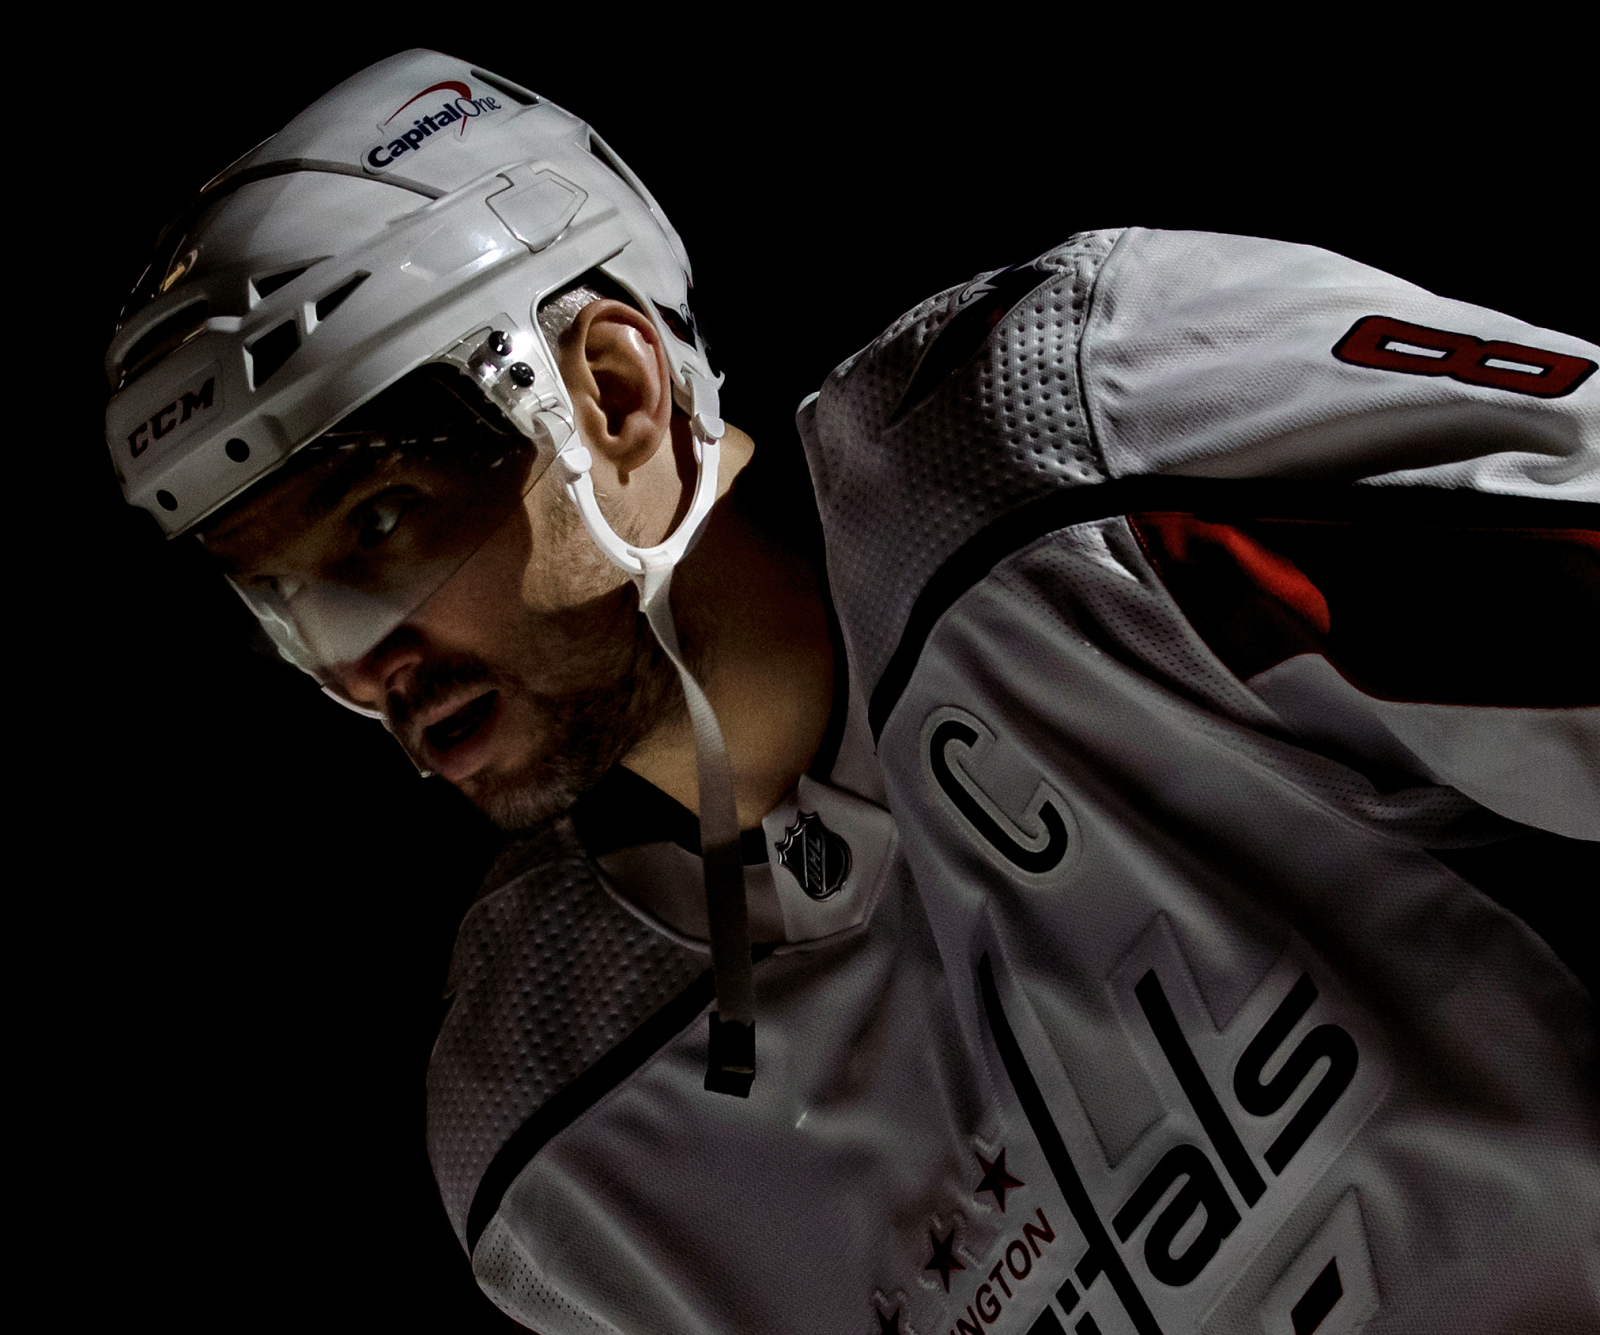 CCM Hockey, MassMutual will no longer promote Alex Ovechkin - DC